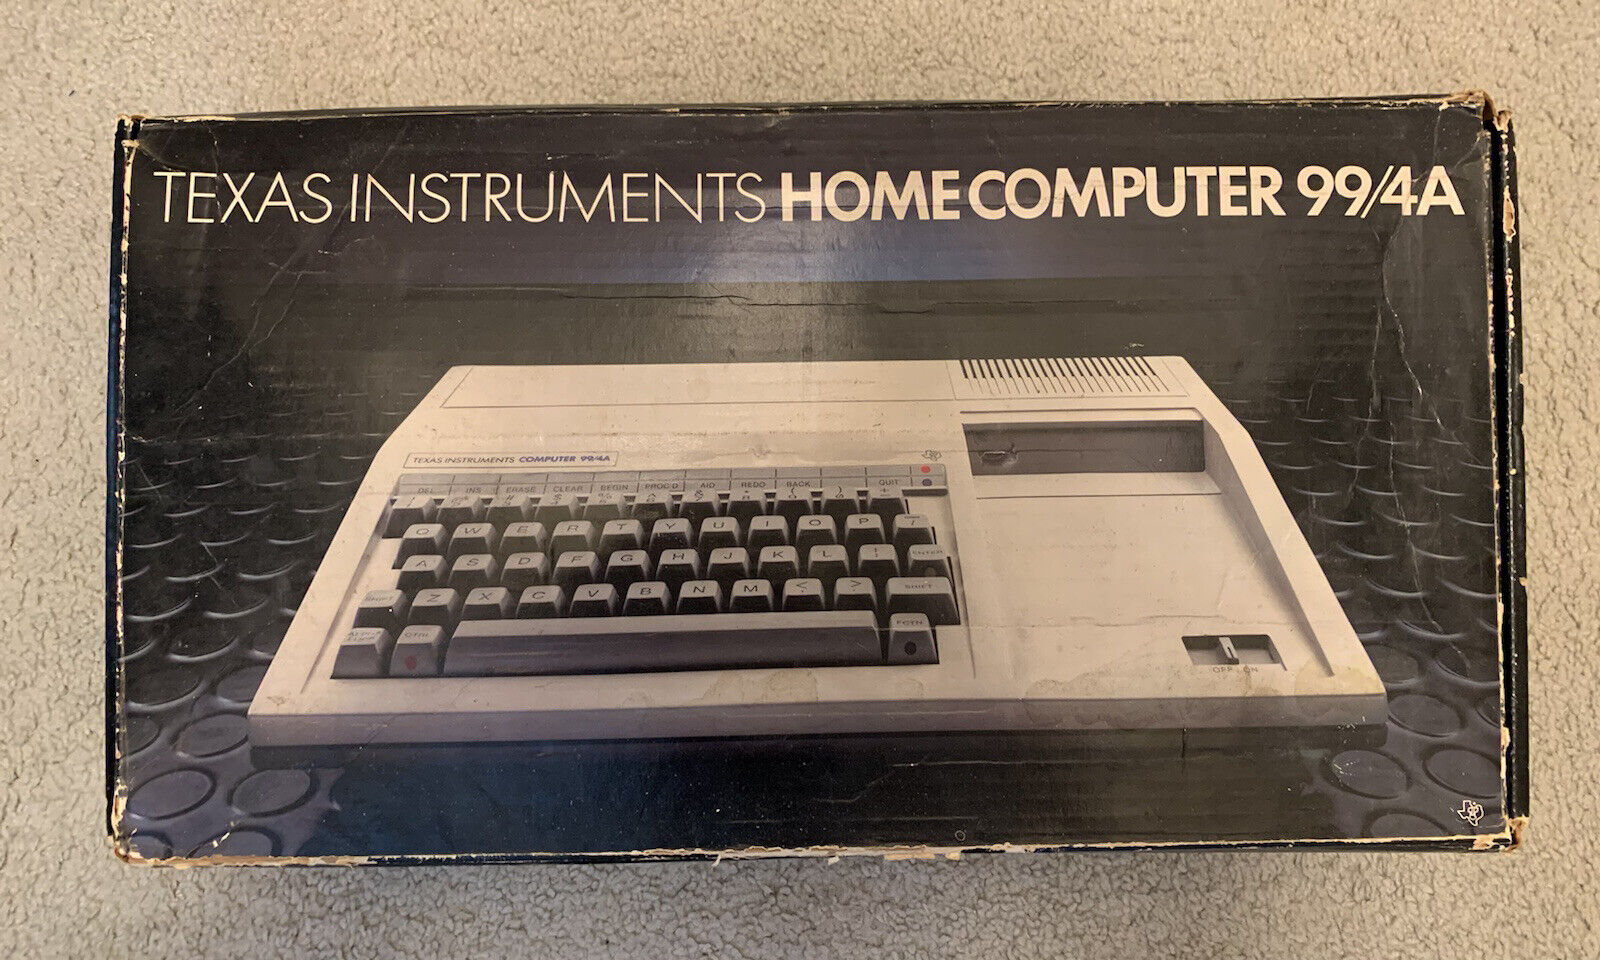 Texas Instruments Home Computer 99/4A Bundle